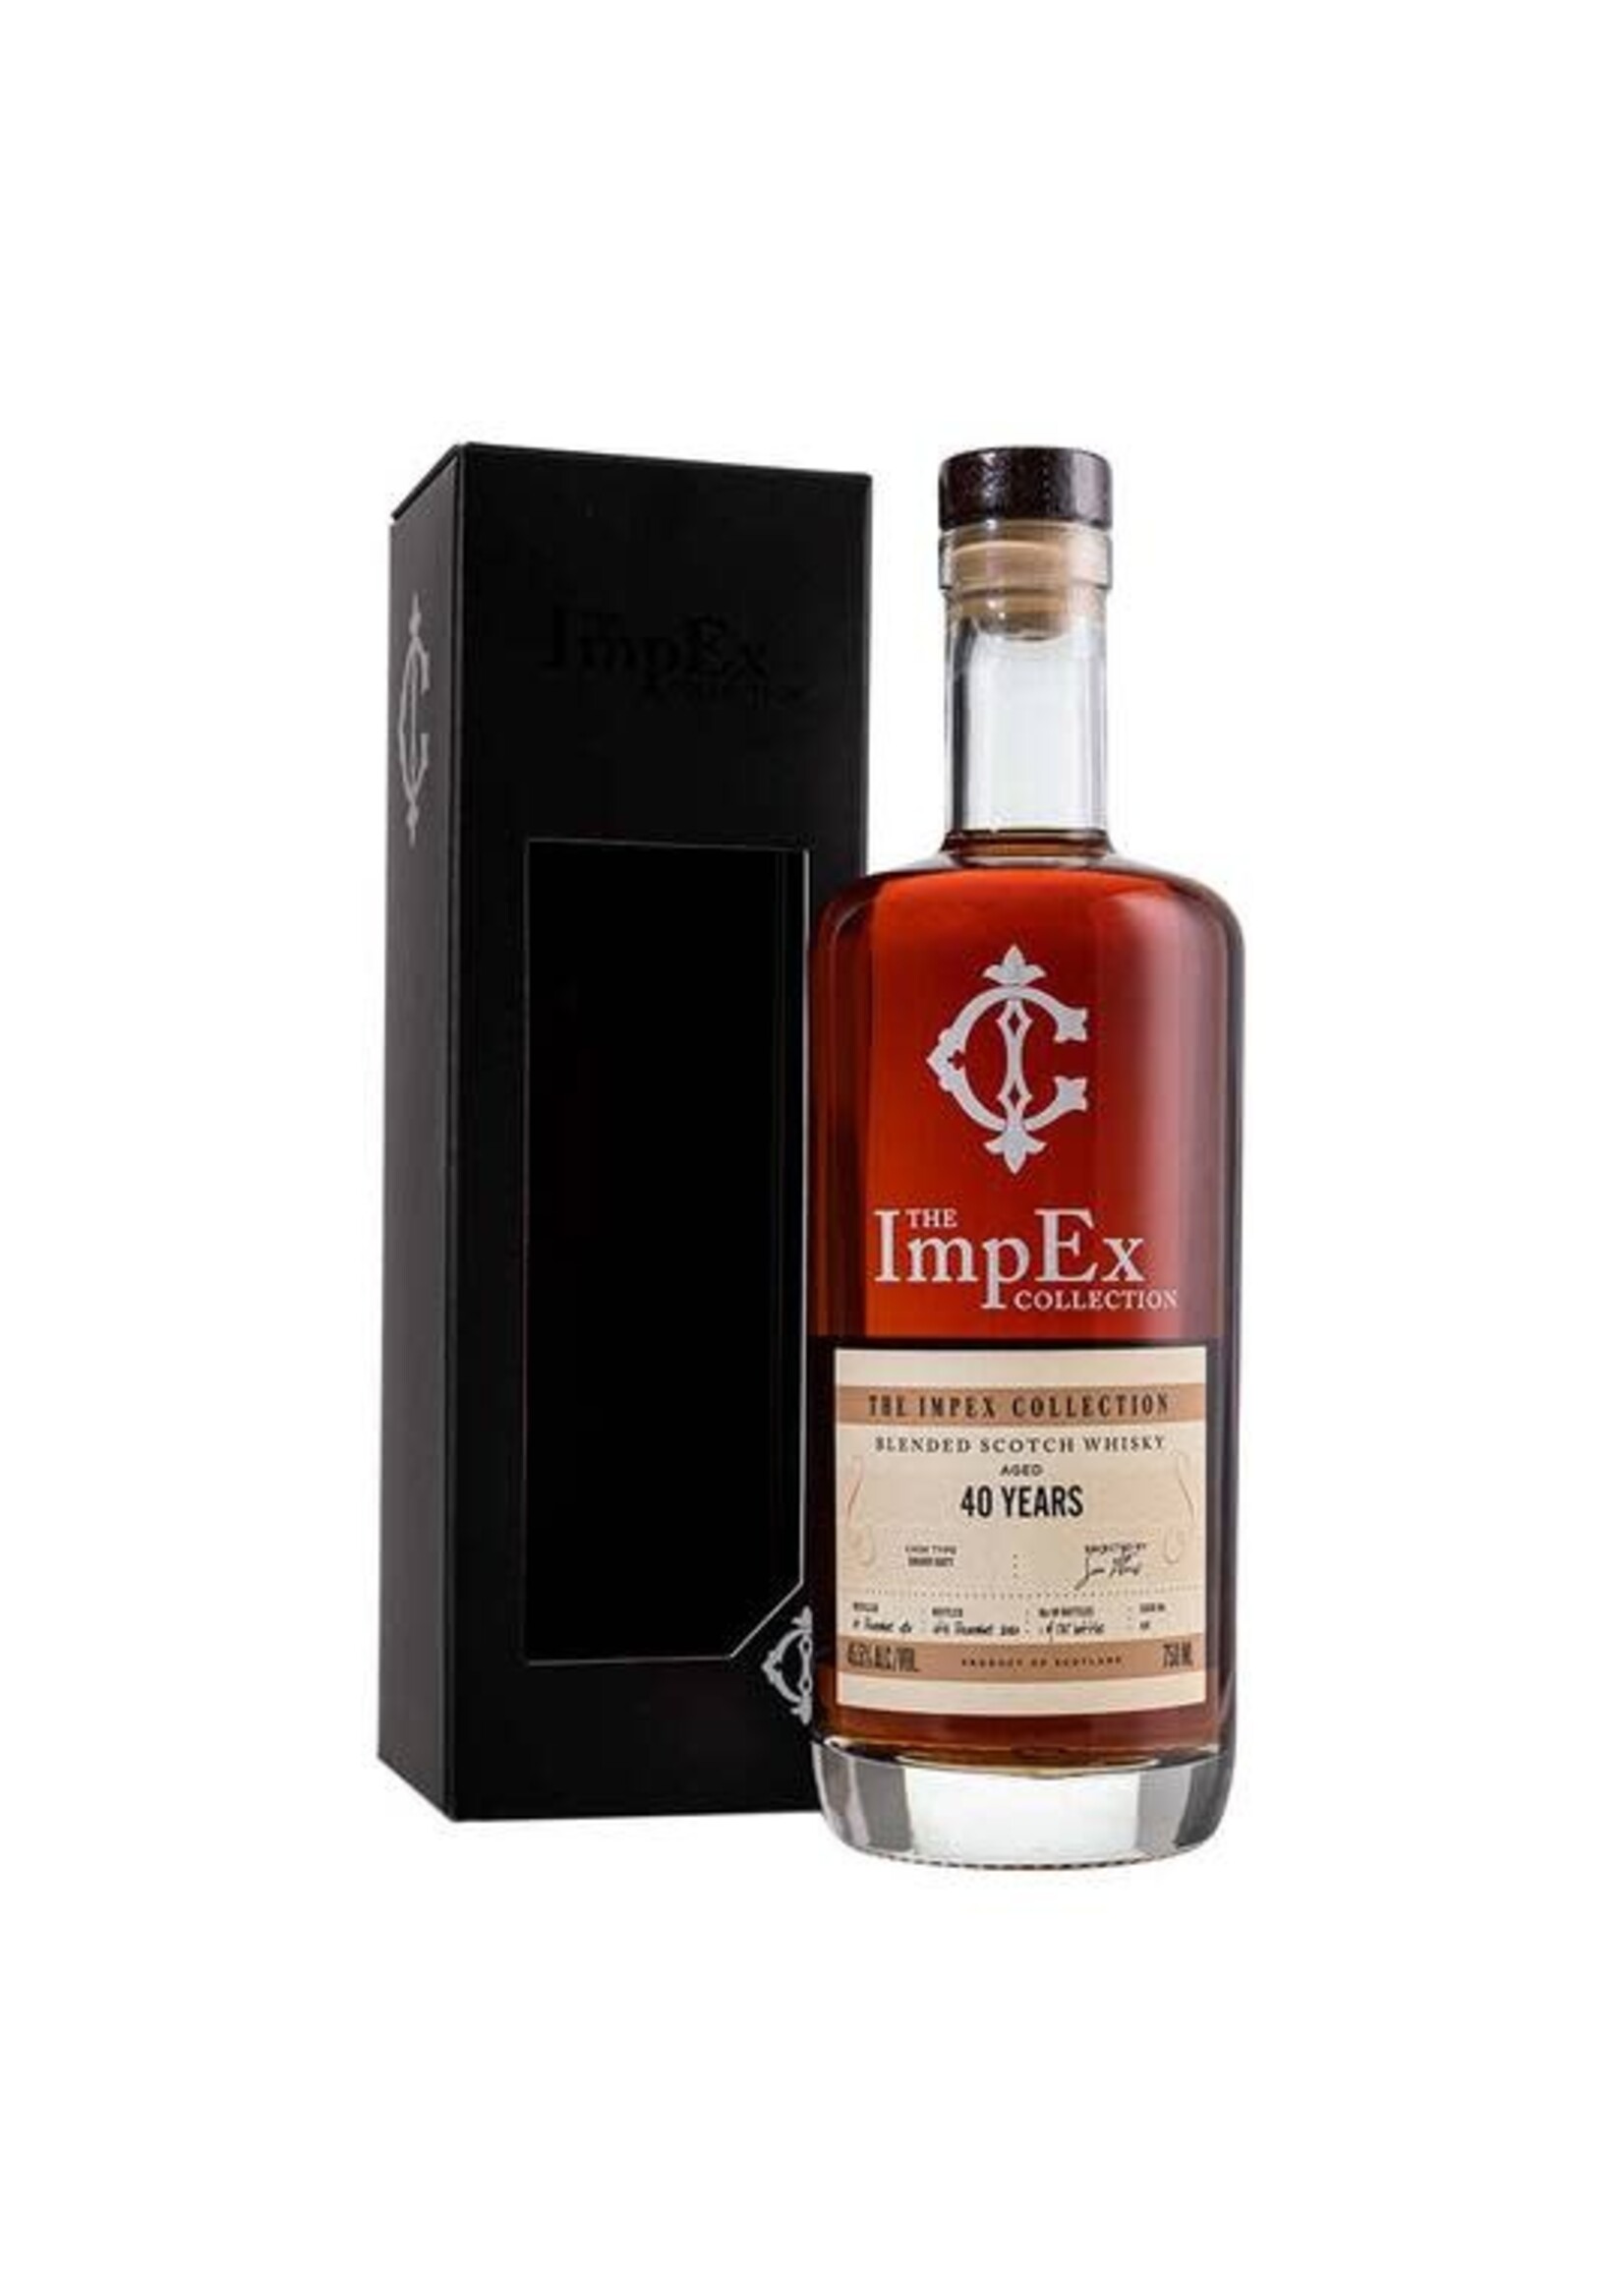 The Impex Collection The Impex Collection / 40 Year Old Blended Scotch Whisky 45.5% abv / 750mL